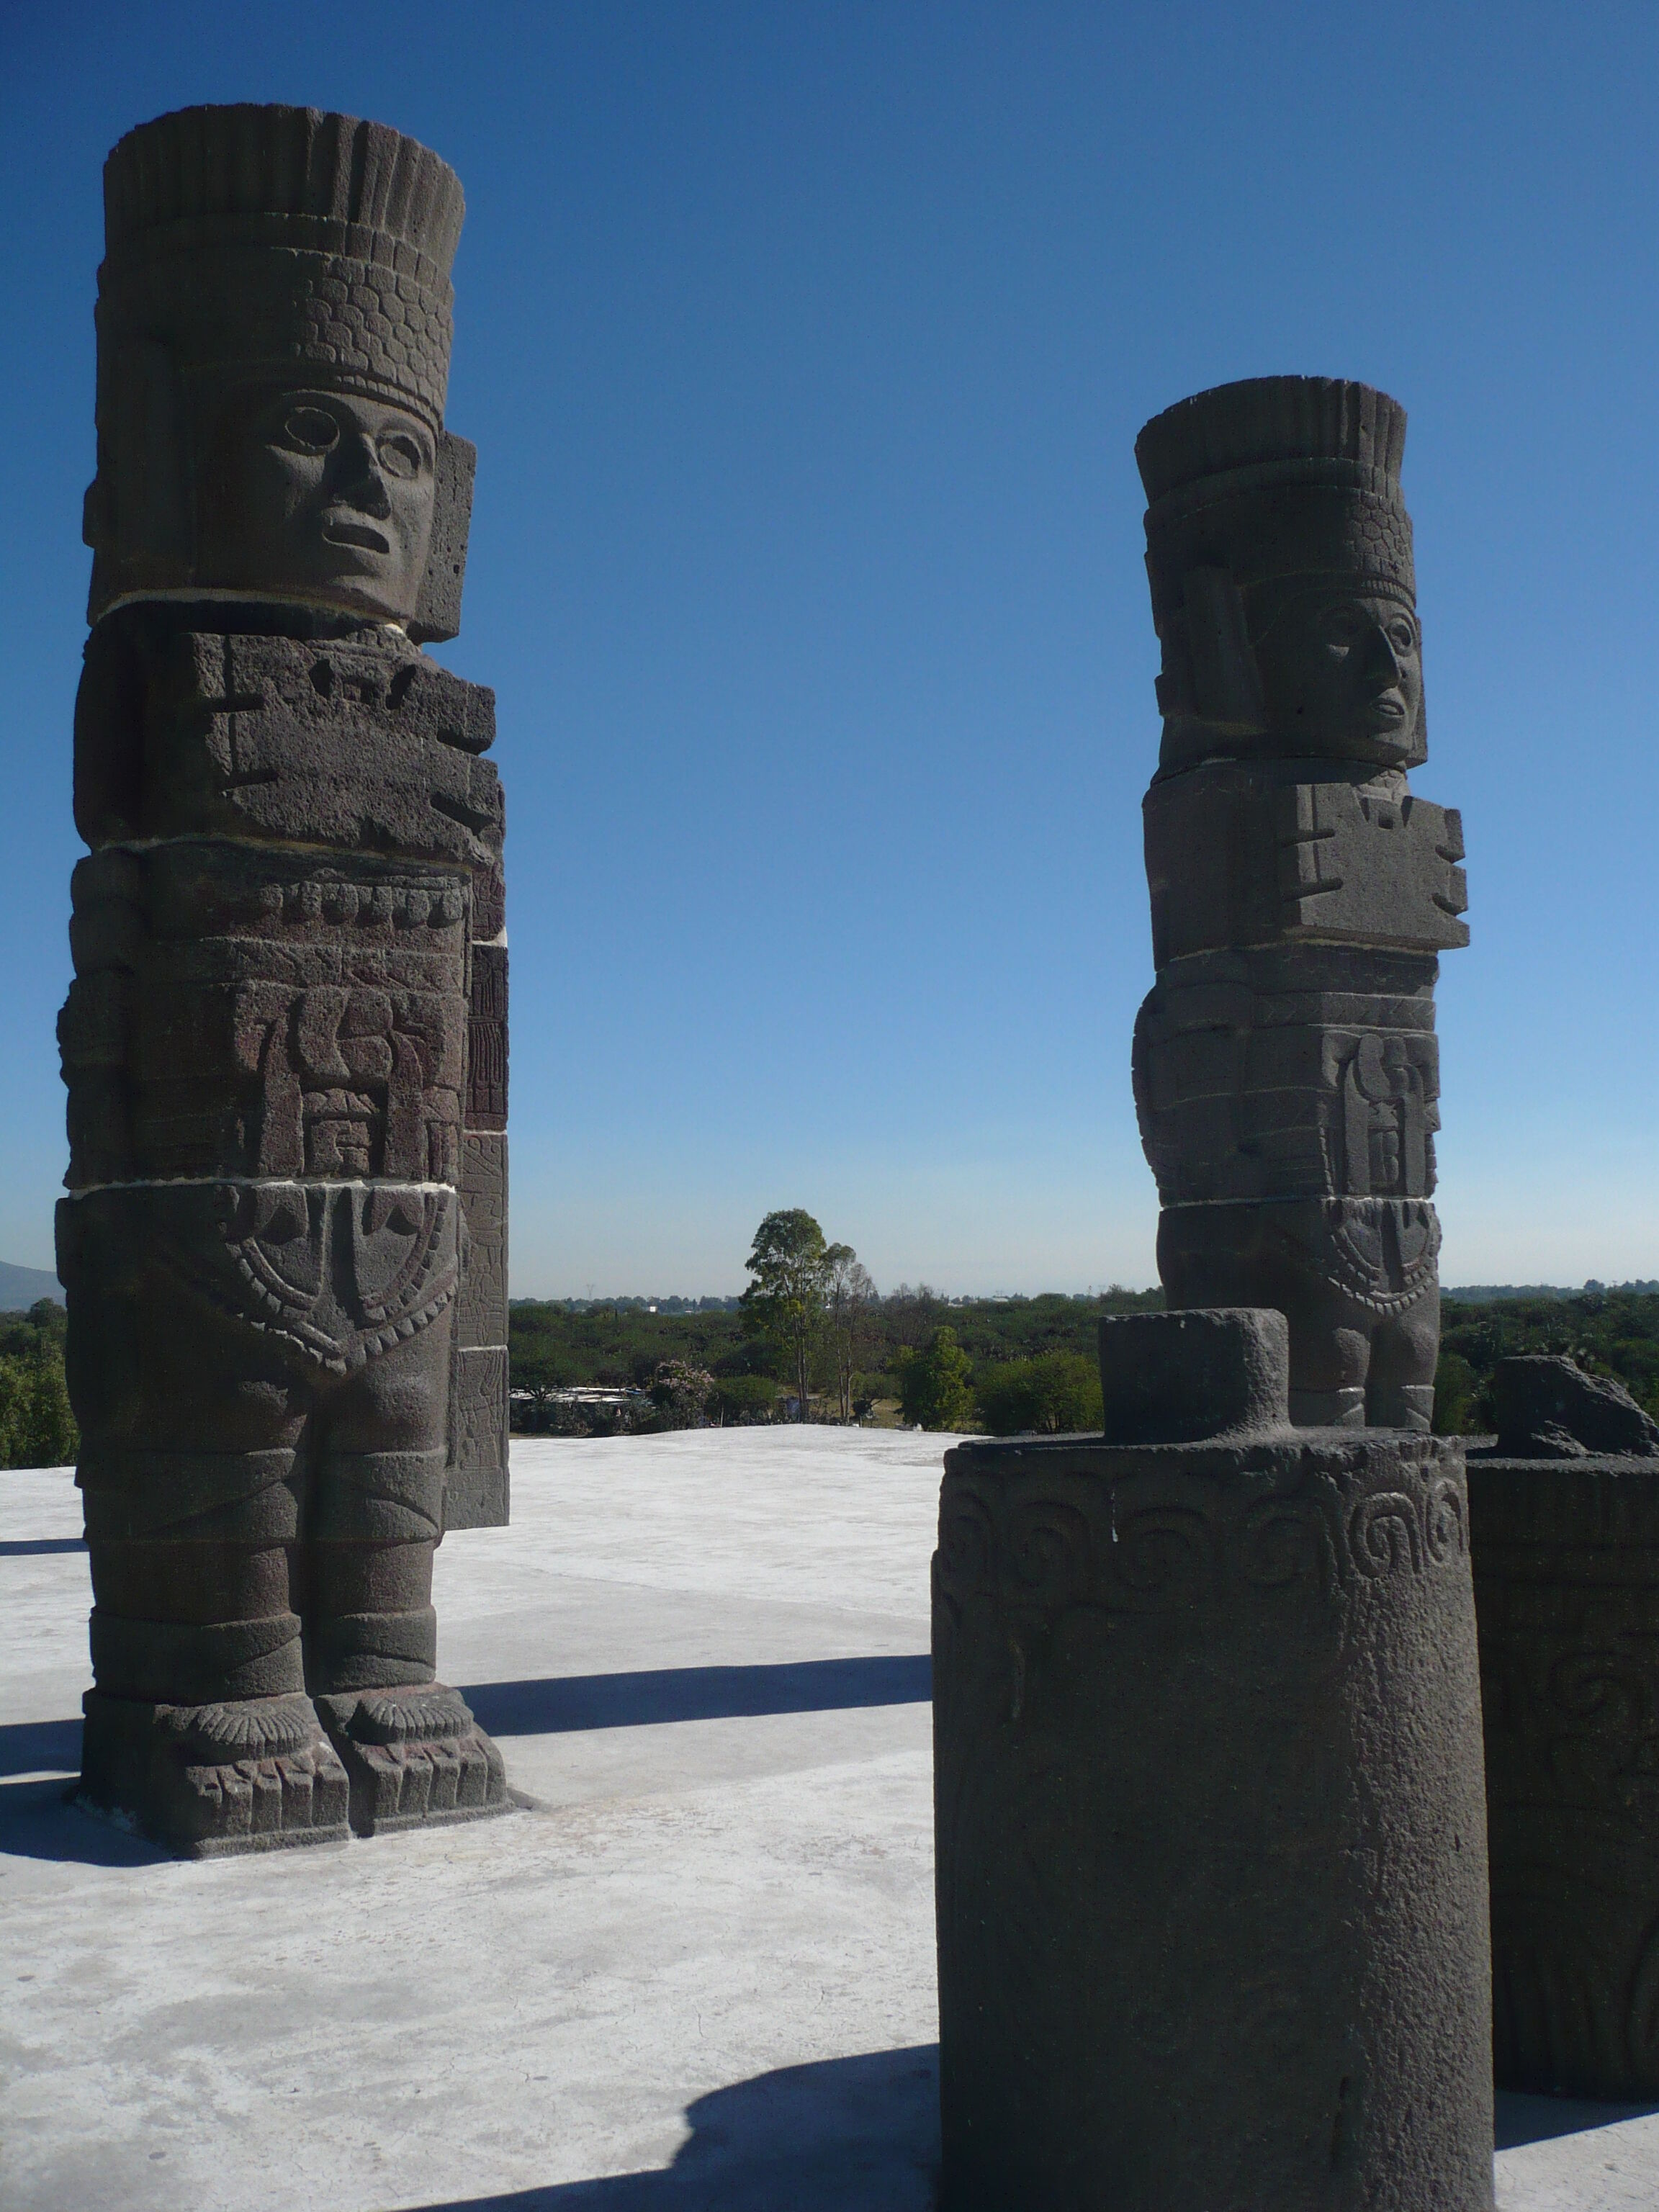 File:El Palacio de Hierro e Iglesia de San Bernardo - Ciudad de México.jpg  - Wikimedia Commons